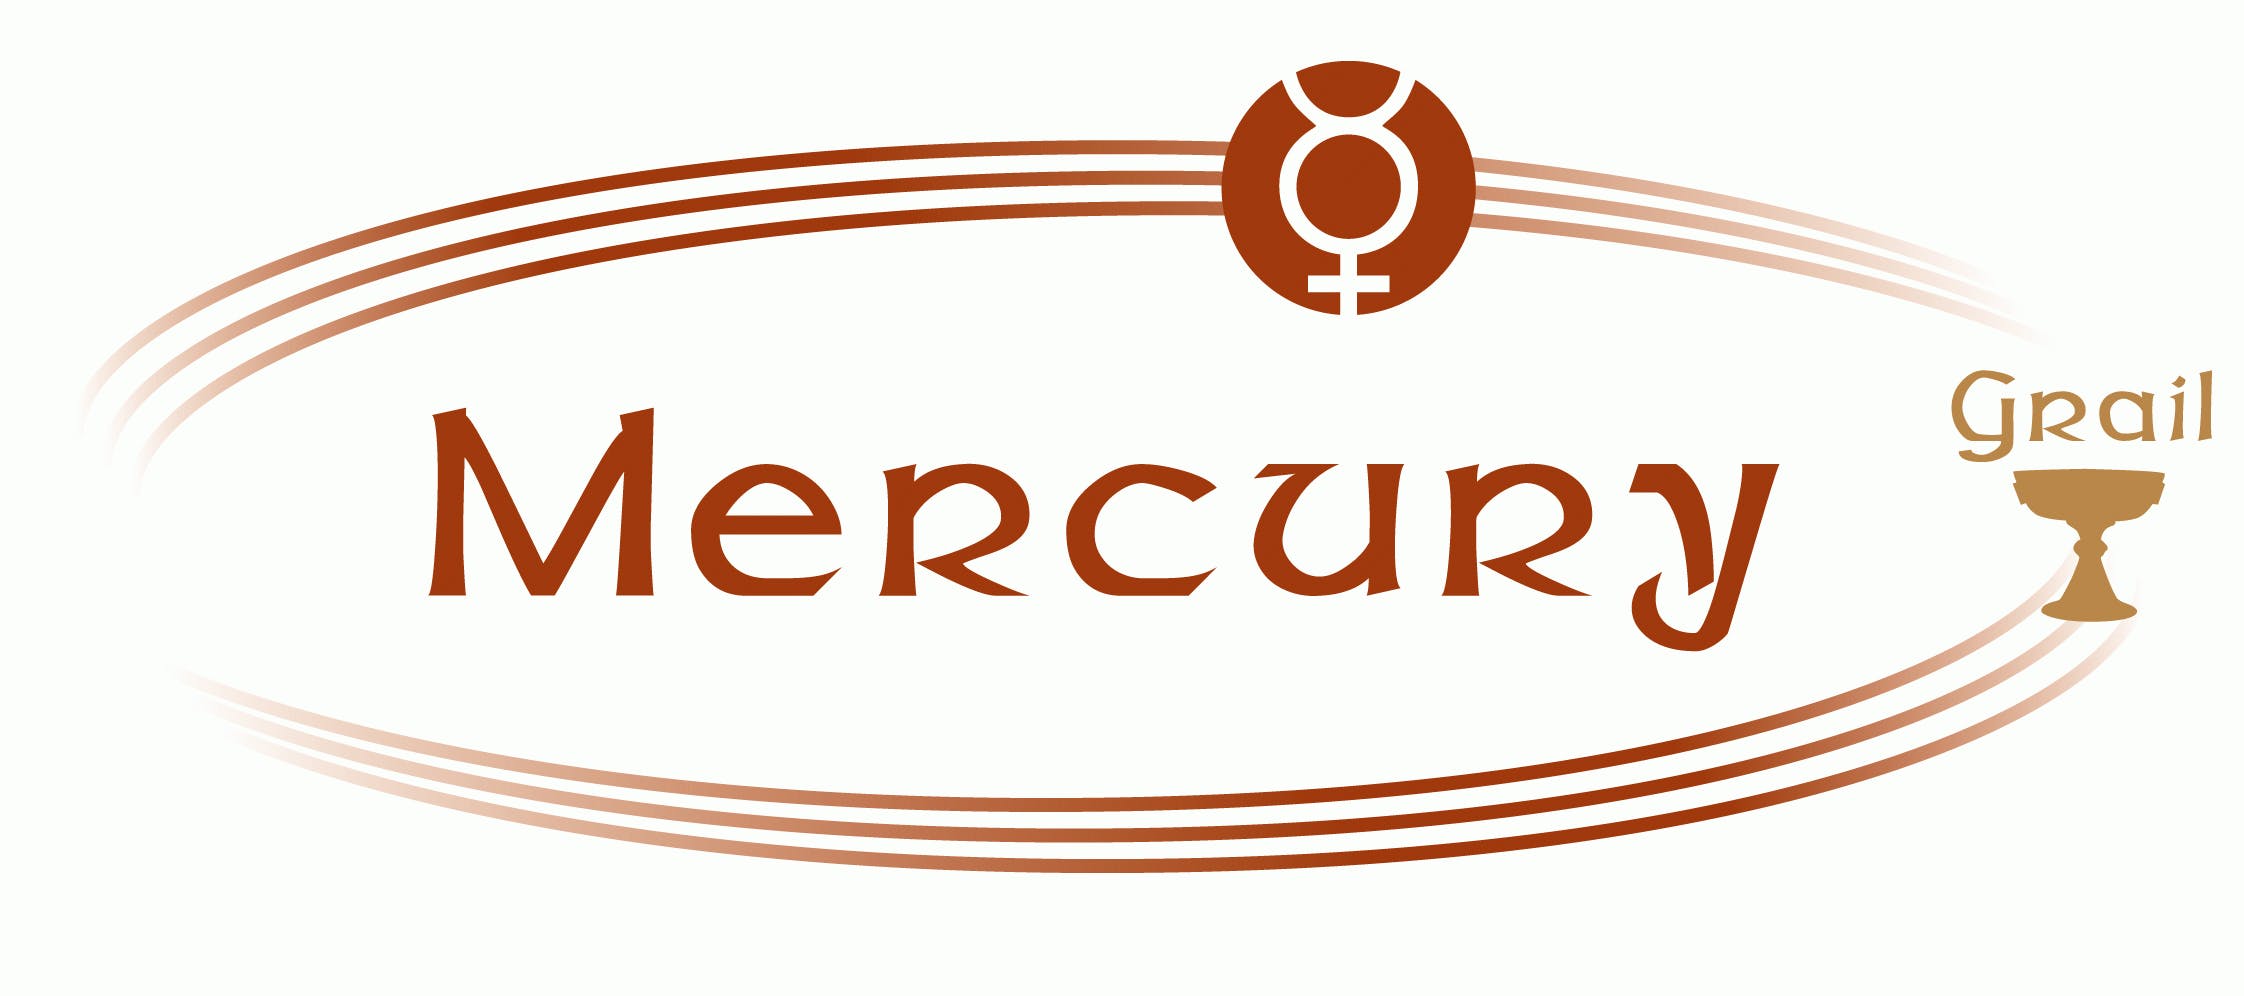 MERCURY_logo_300 DPI gif.gif